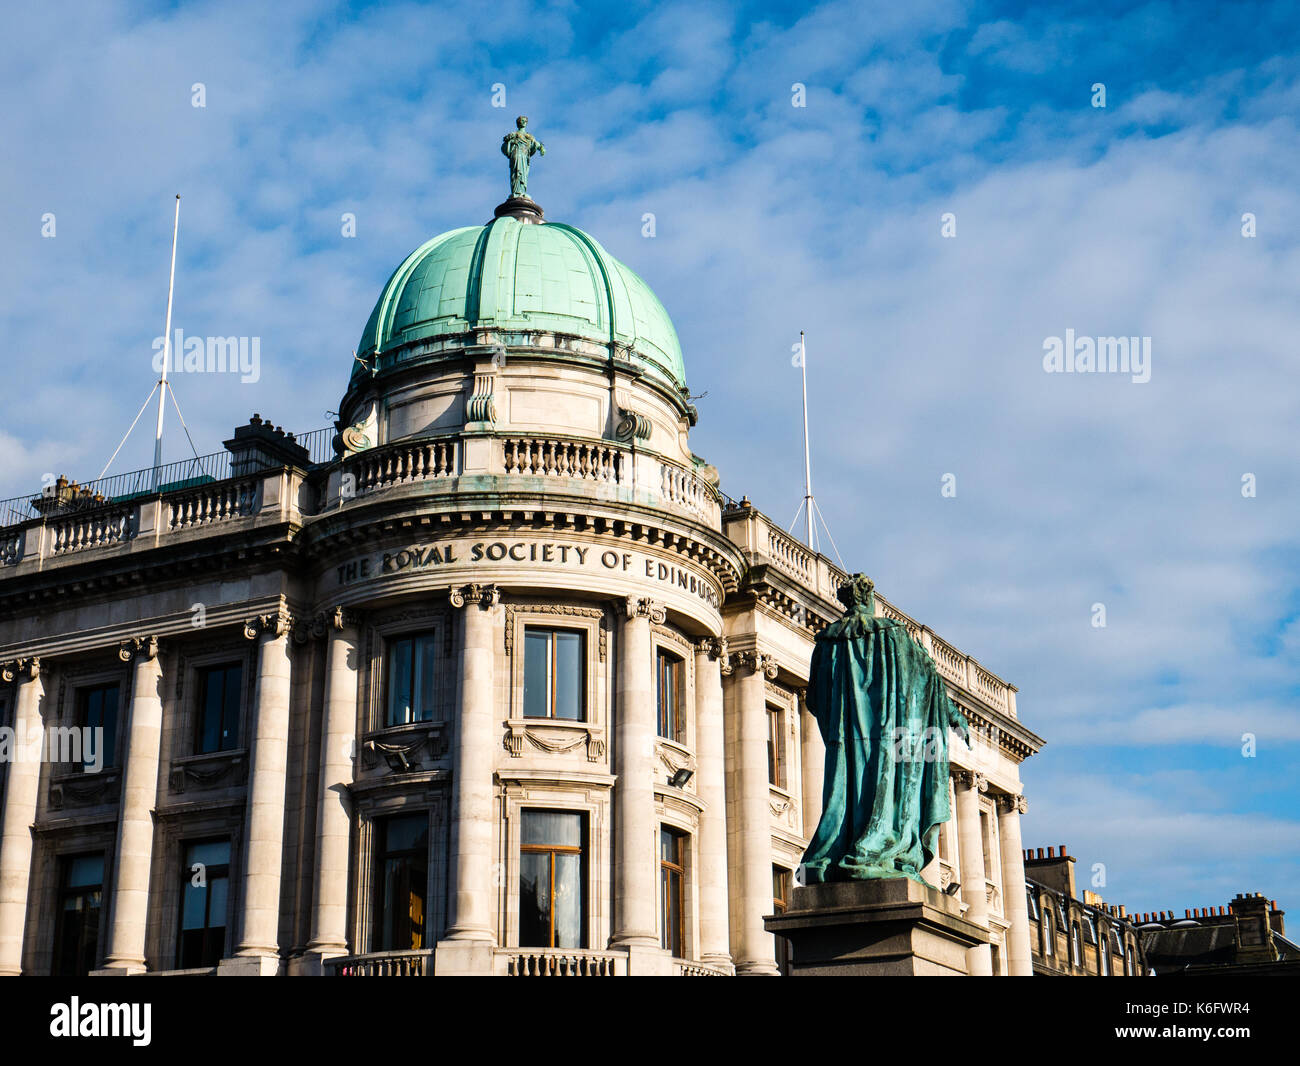 The Royal Society of Edinburgh, Edinburgh, Scotland, UK, GB. Stock Photo